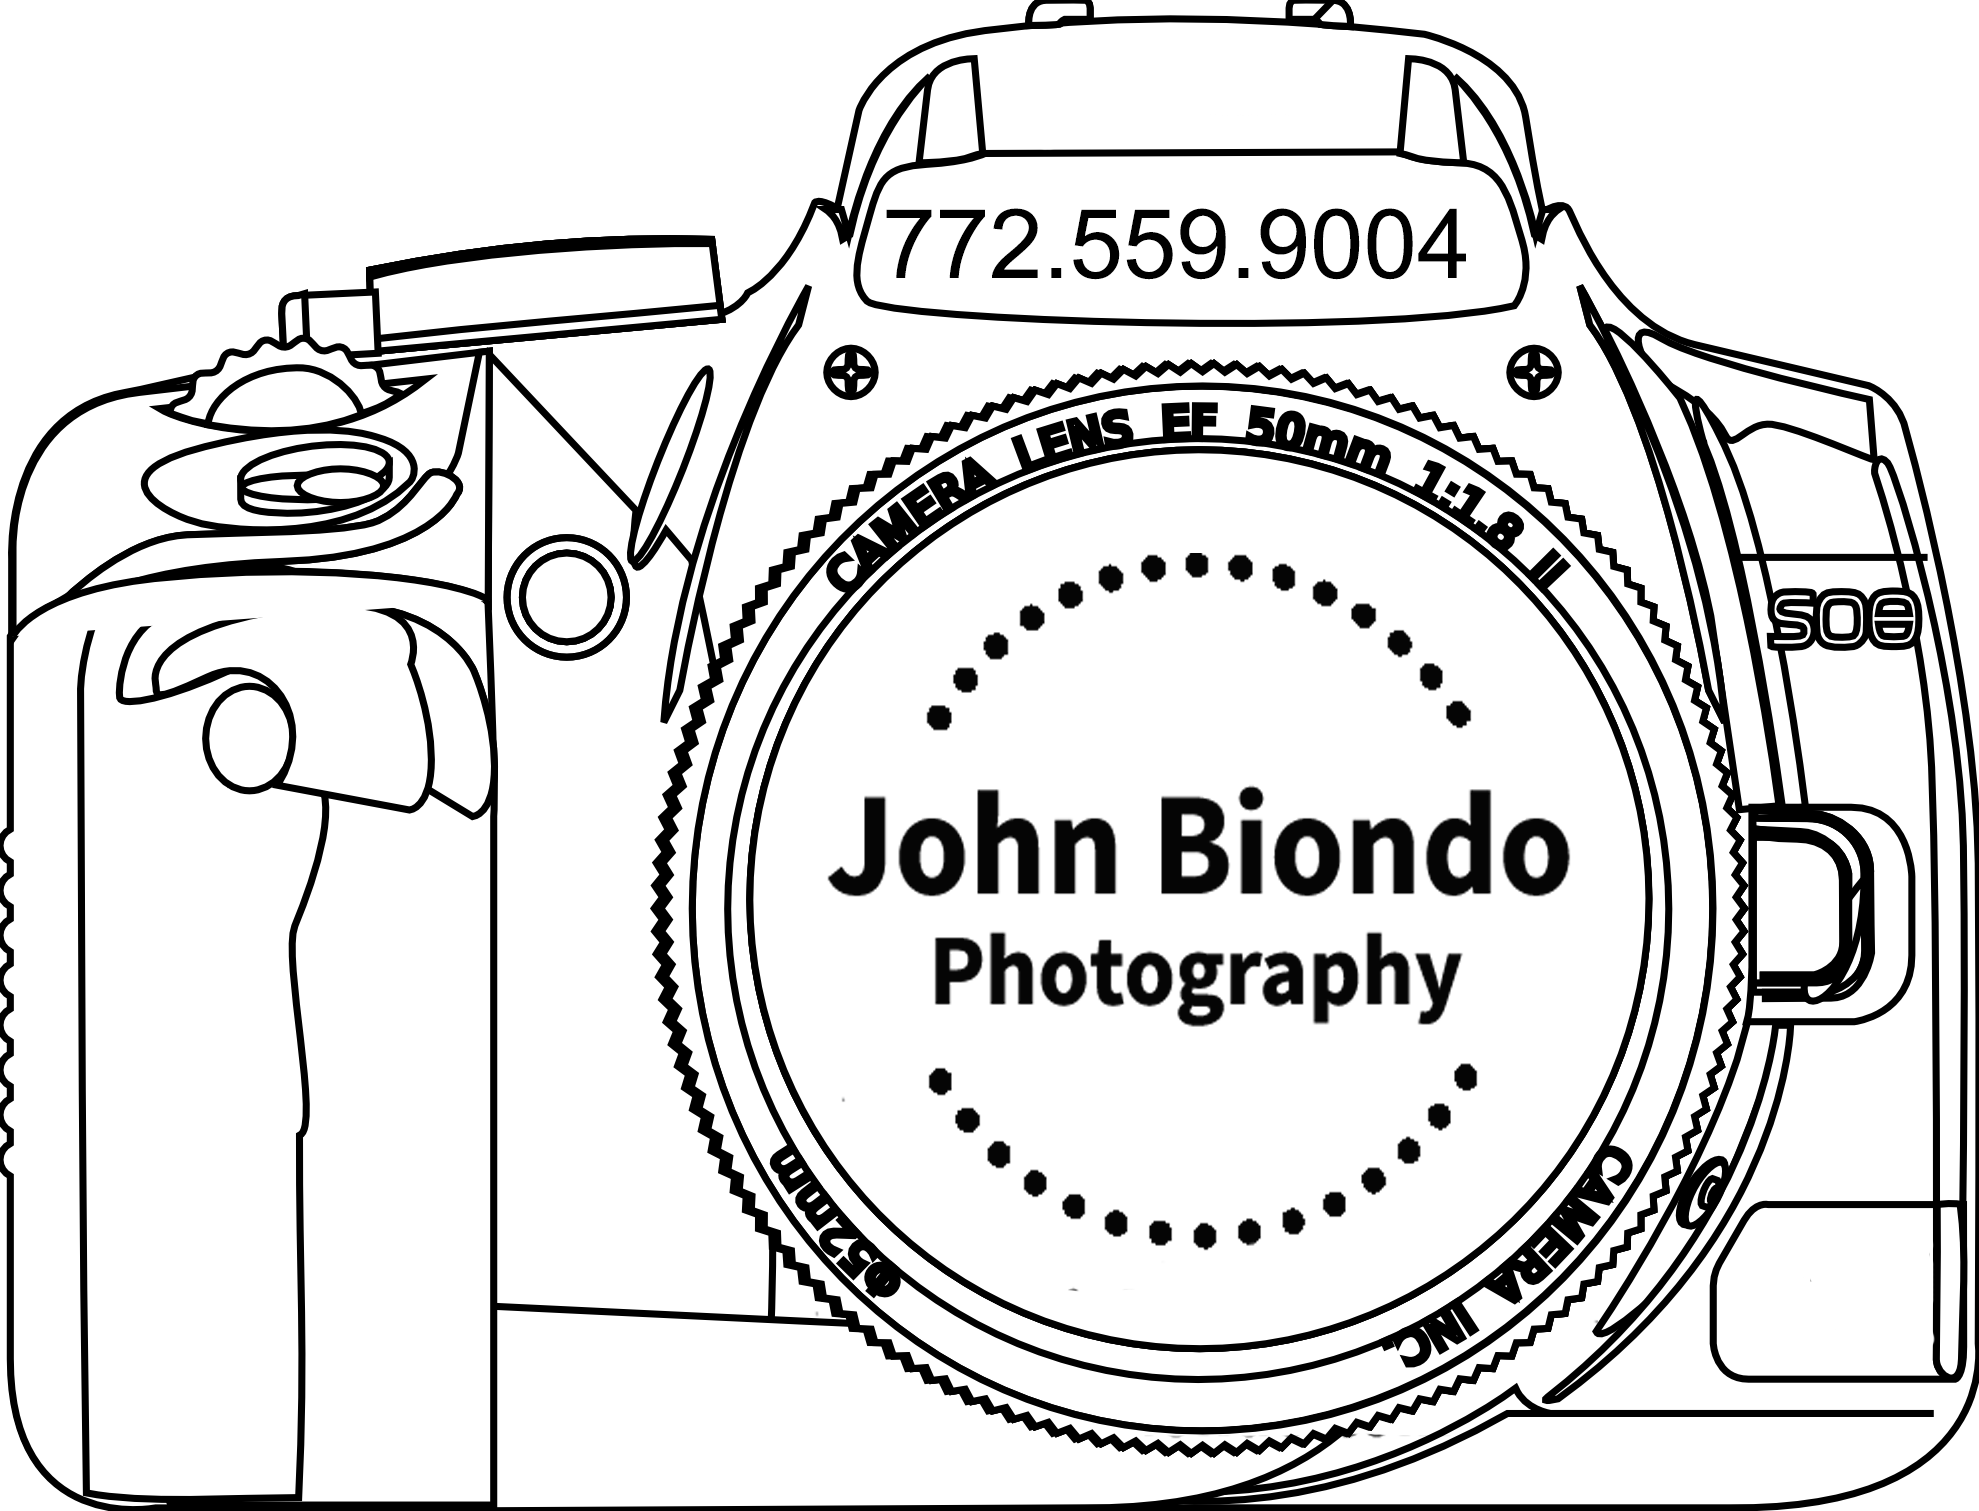 John Biondo Photogrpahy